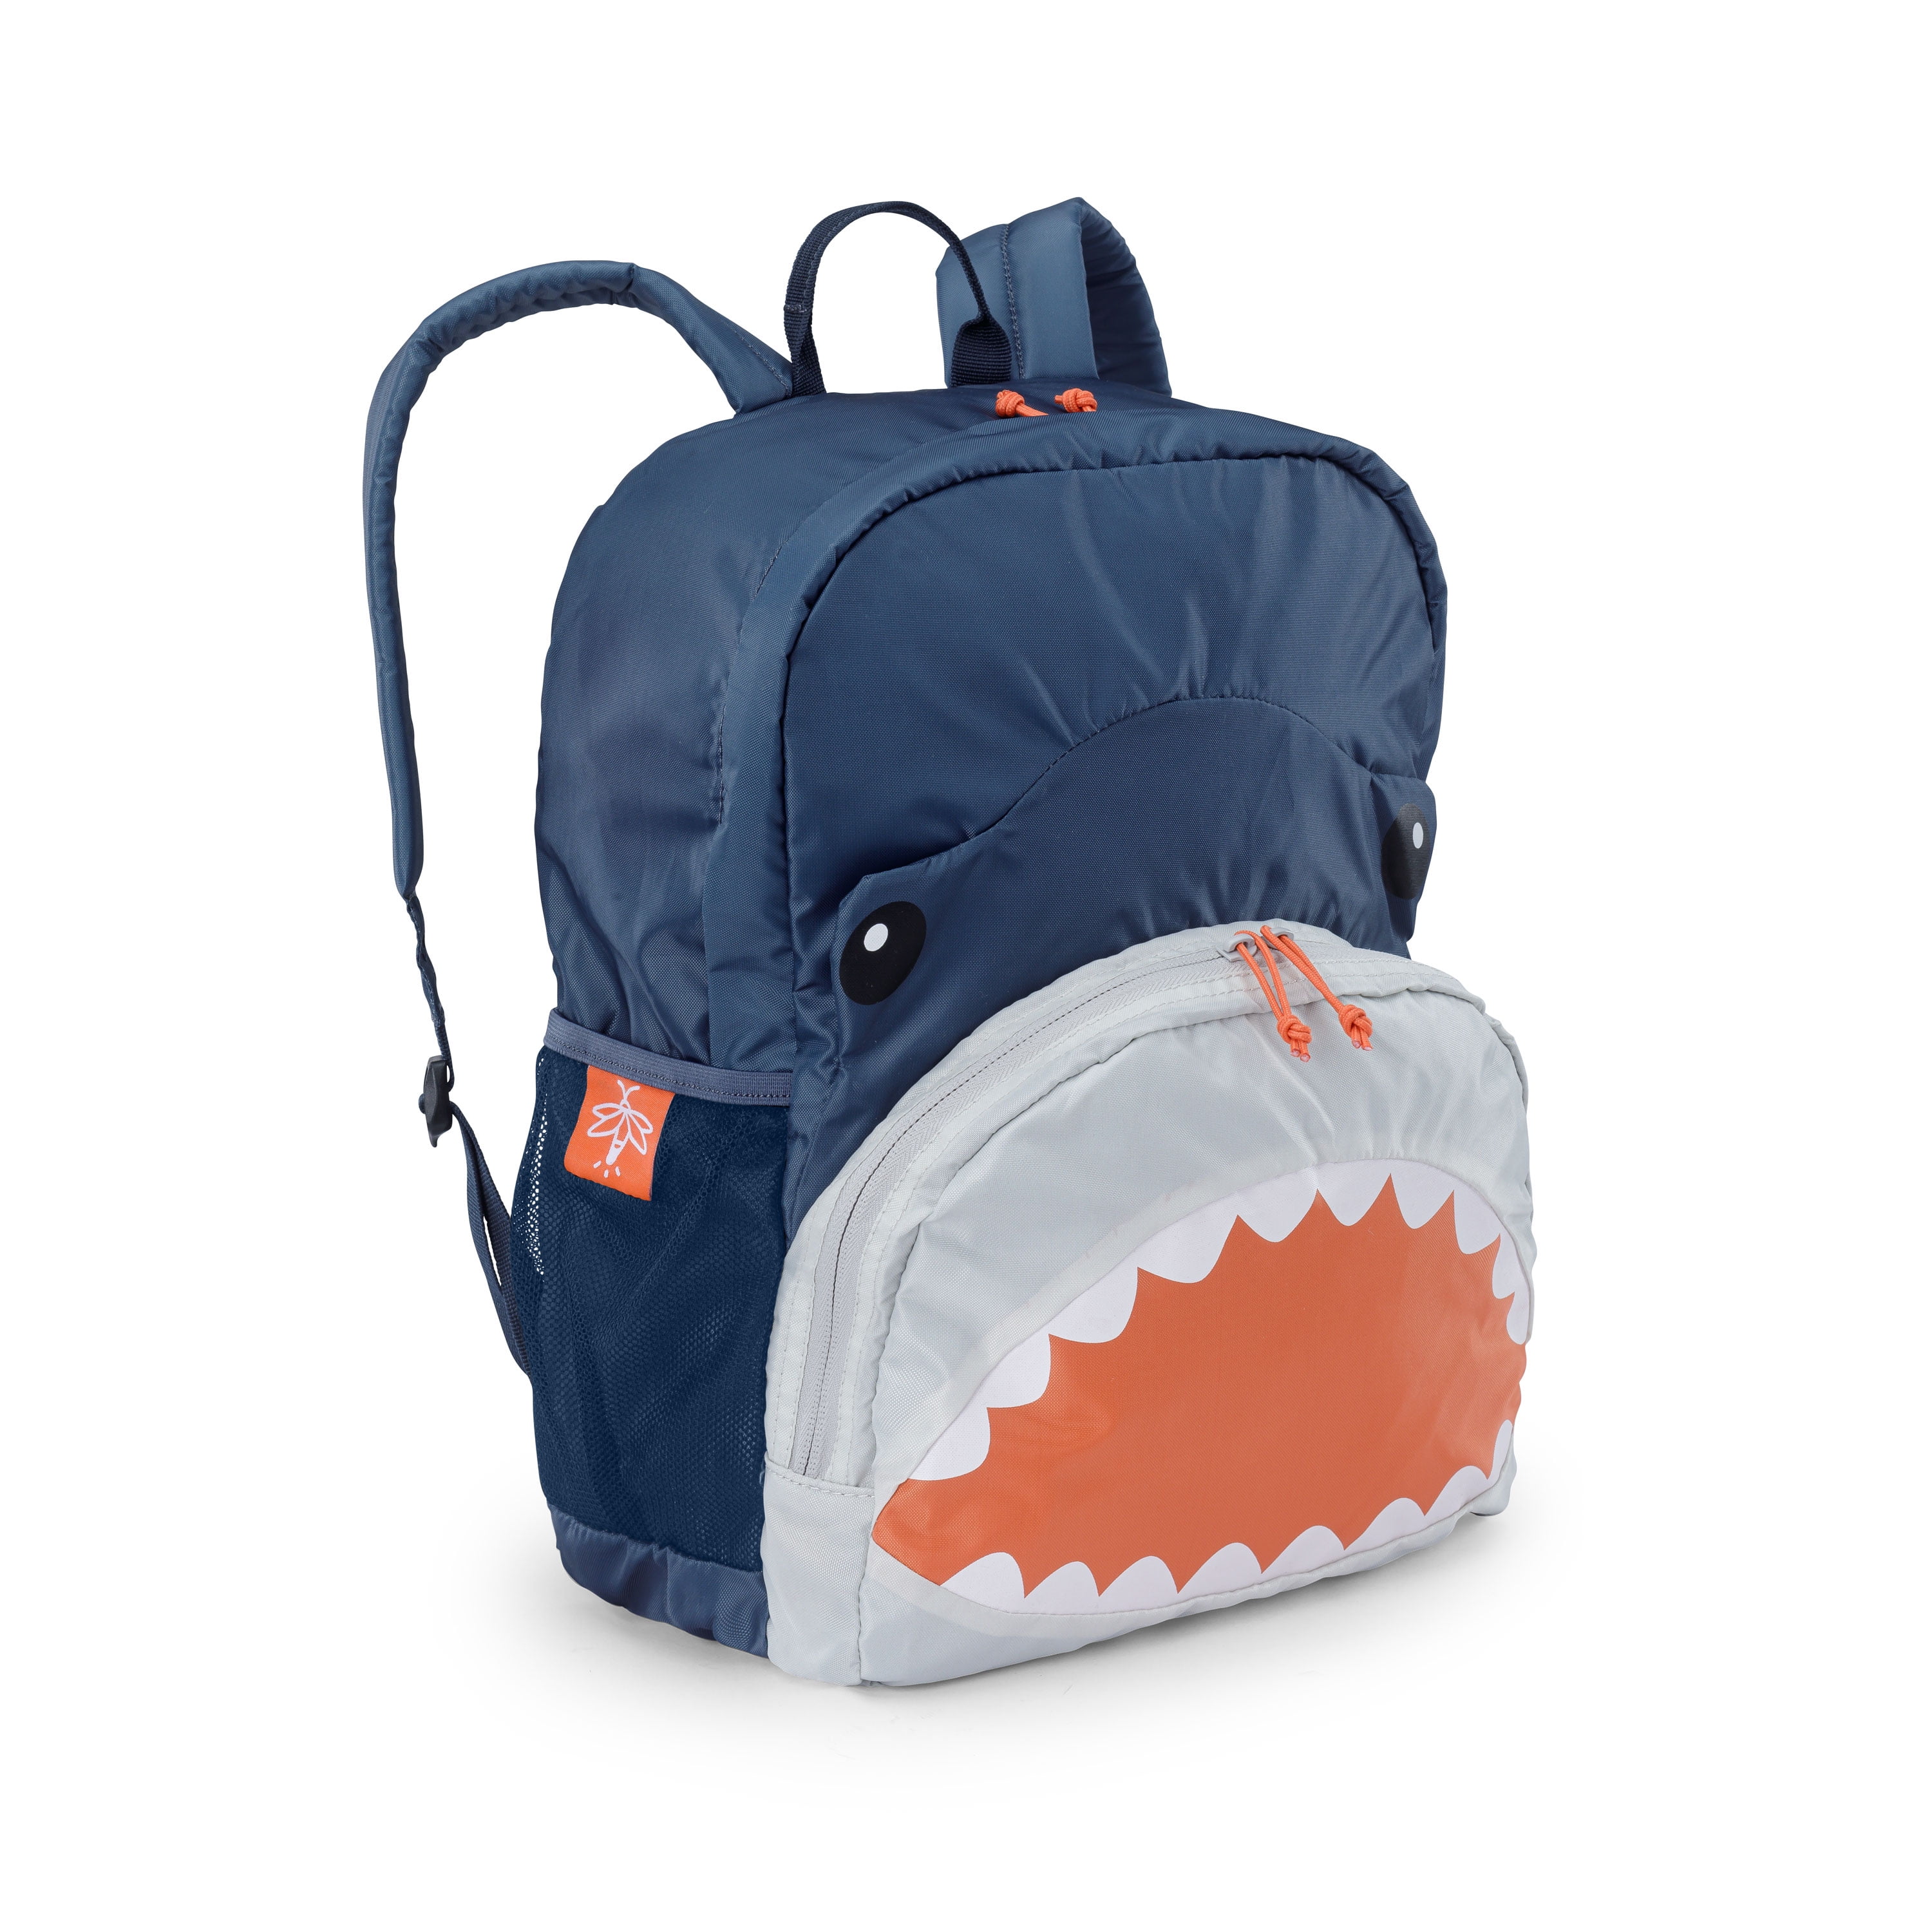 Firefly! Outdoor Gear Finn the Shark Kid's Backpack - Navy Blue (15 Liter),  Unisex, Polyester